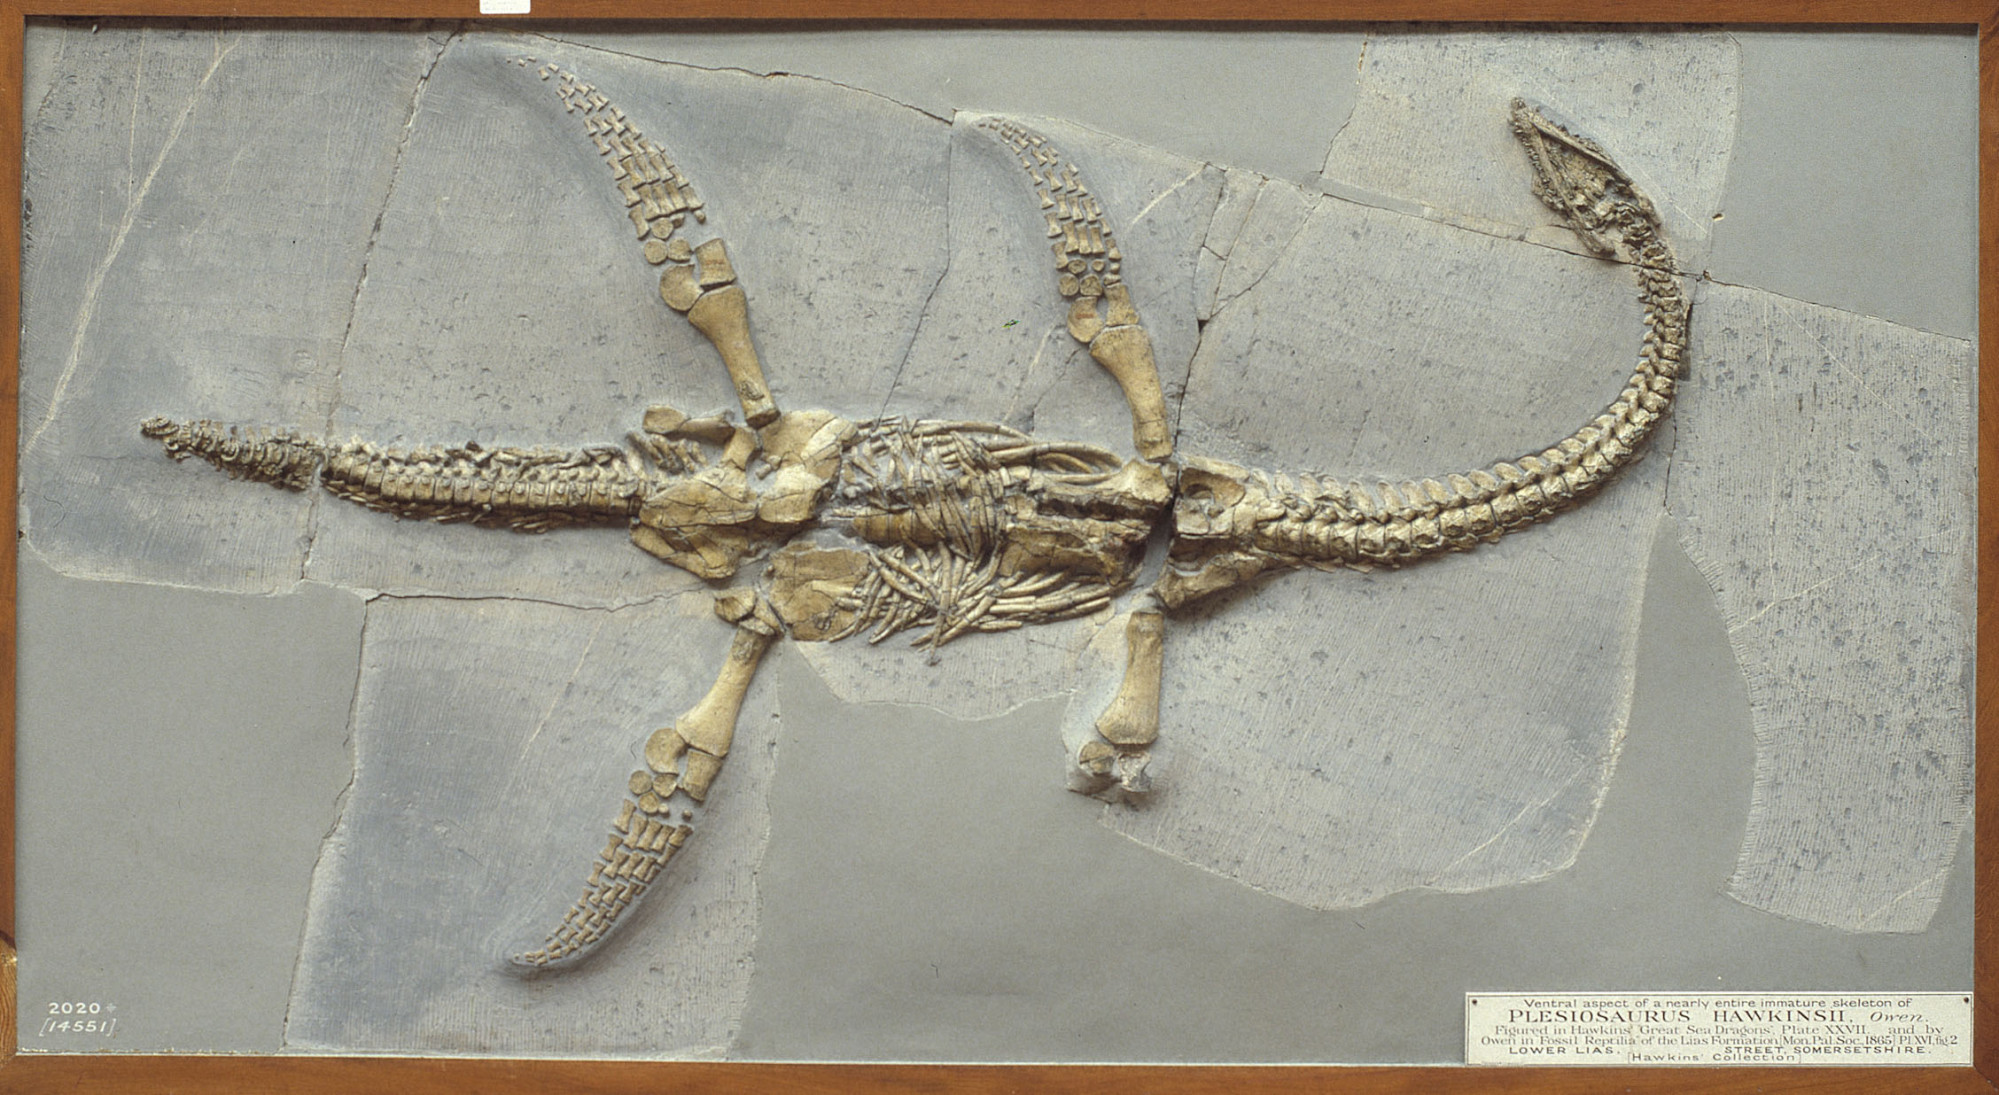 Plesiosaurus from England